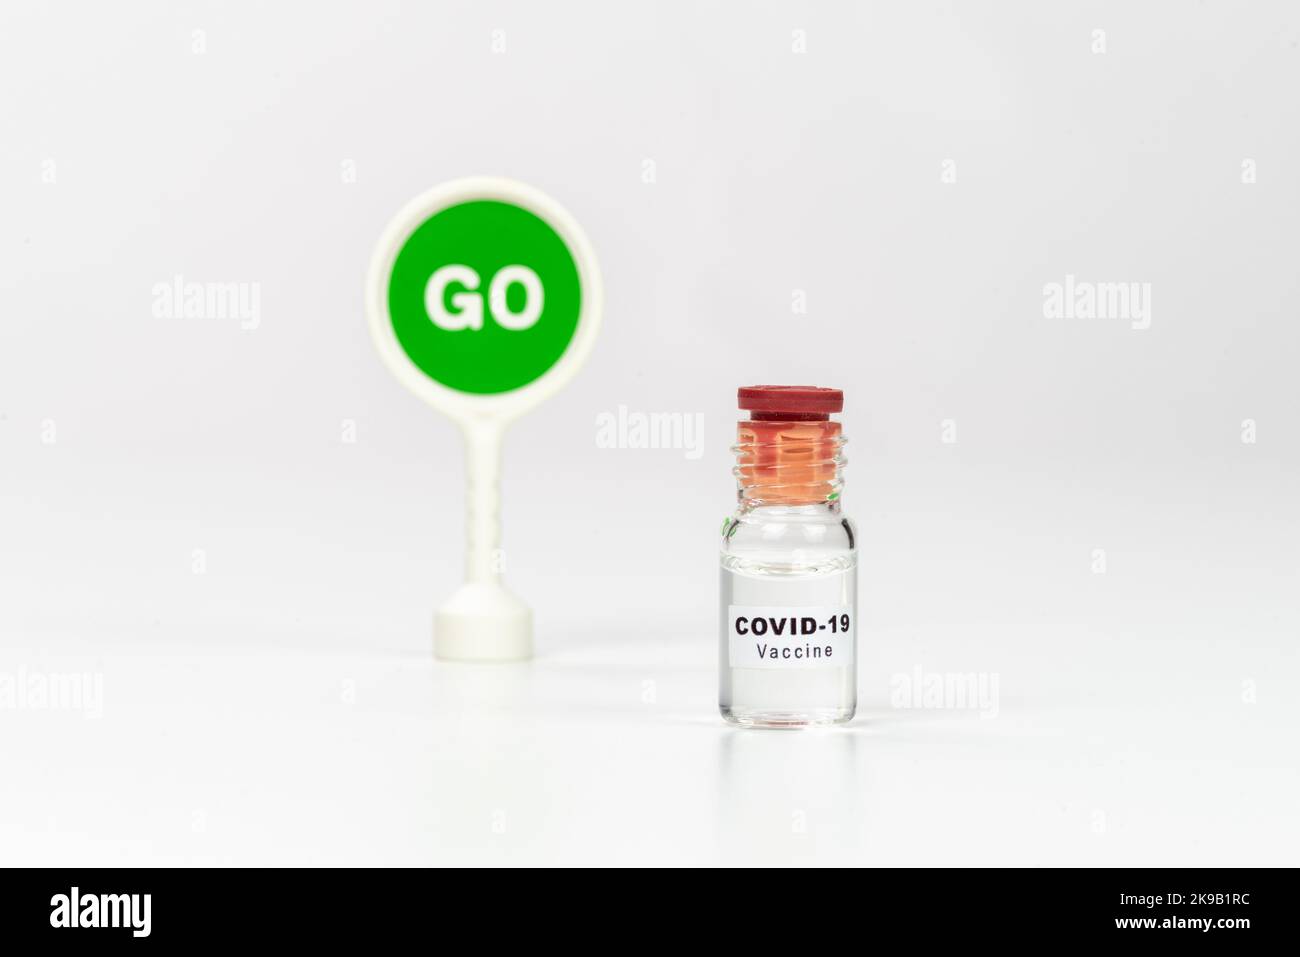 Coronavirus Covid-19 vaccine and message GO on green sign. Stock Photo